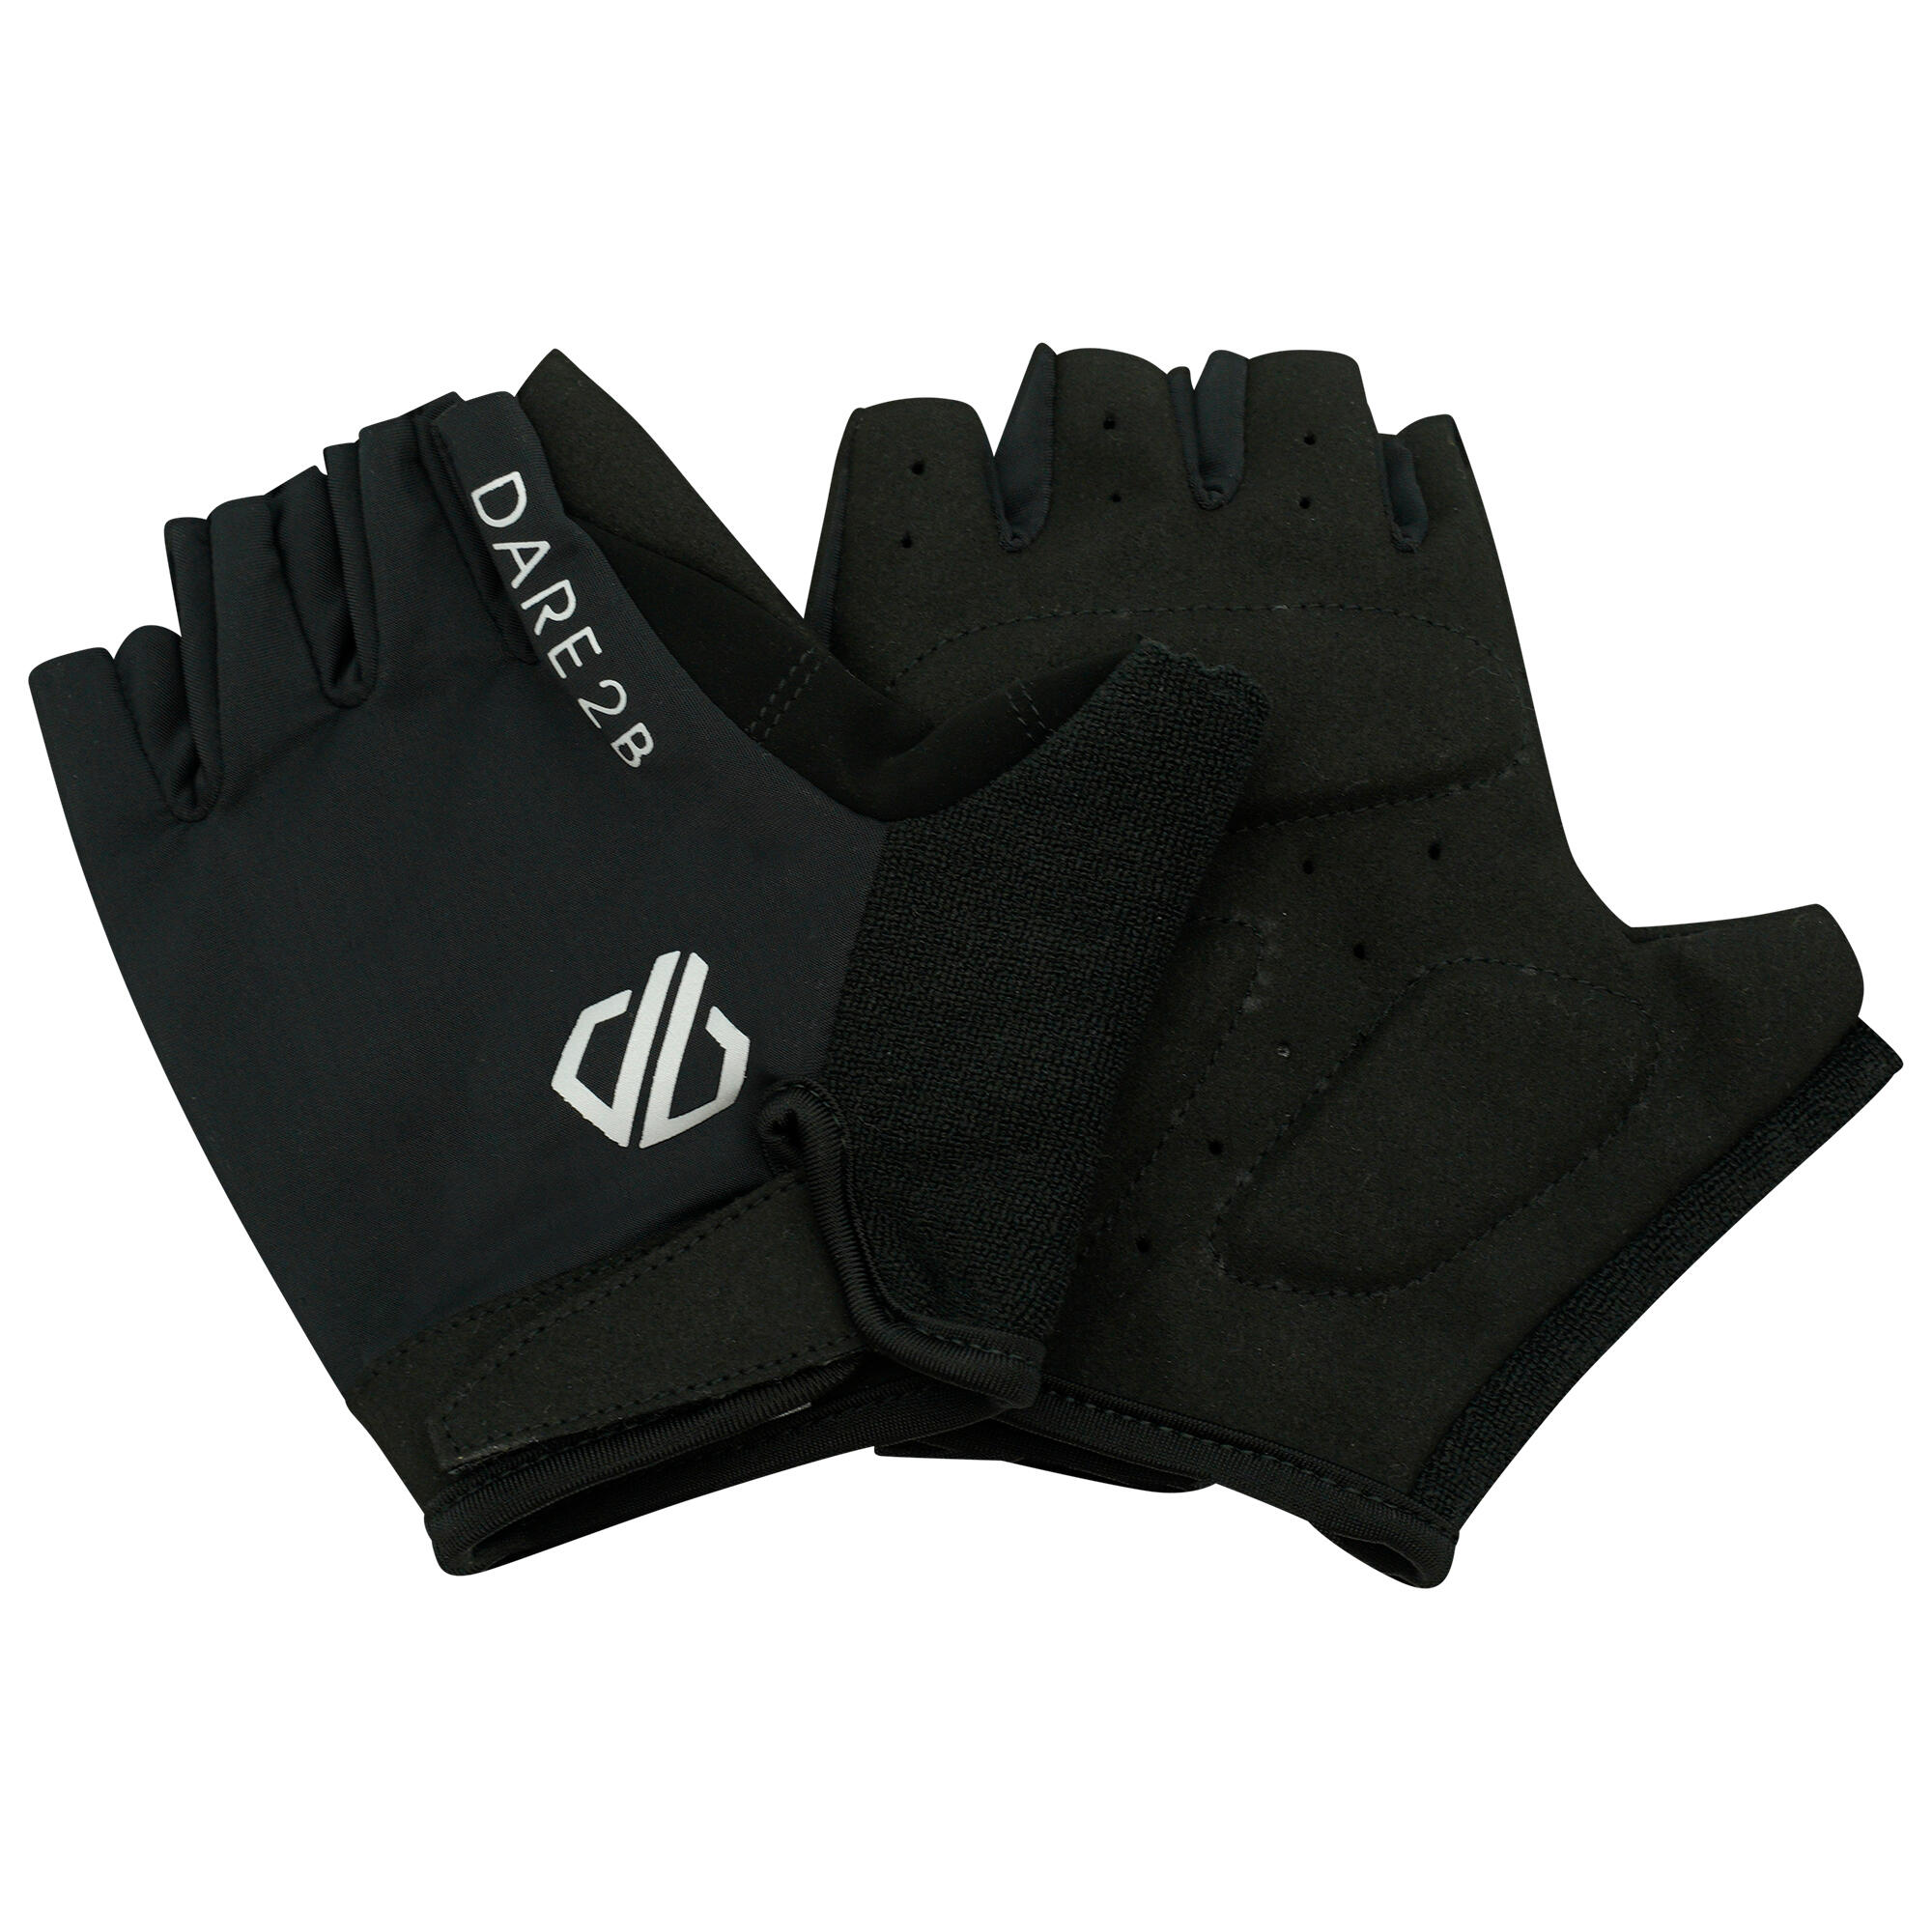 Dare 2b - Women's Pedal Out Fingerless Gloves 2/3